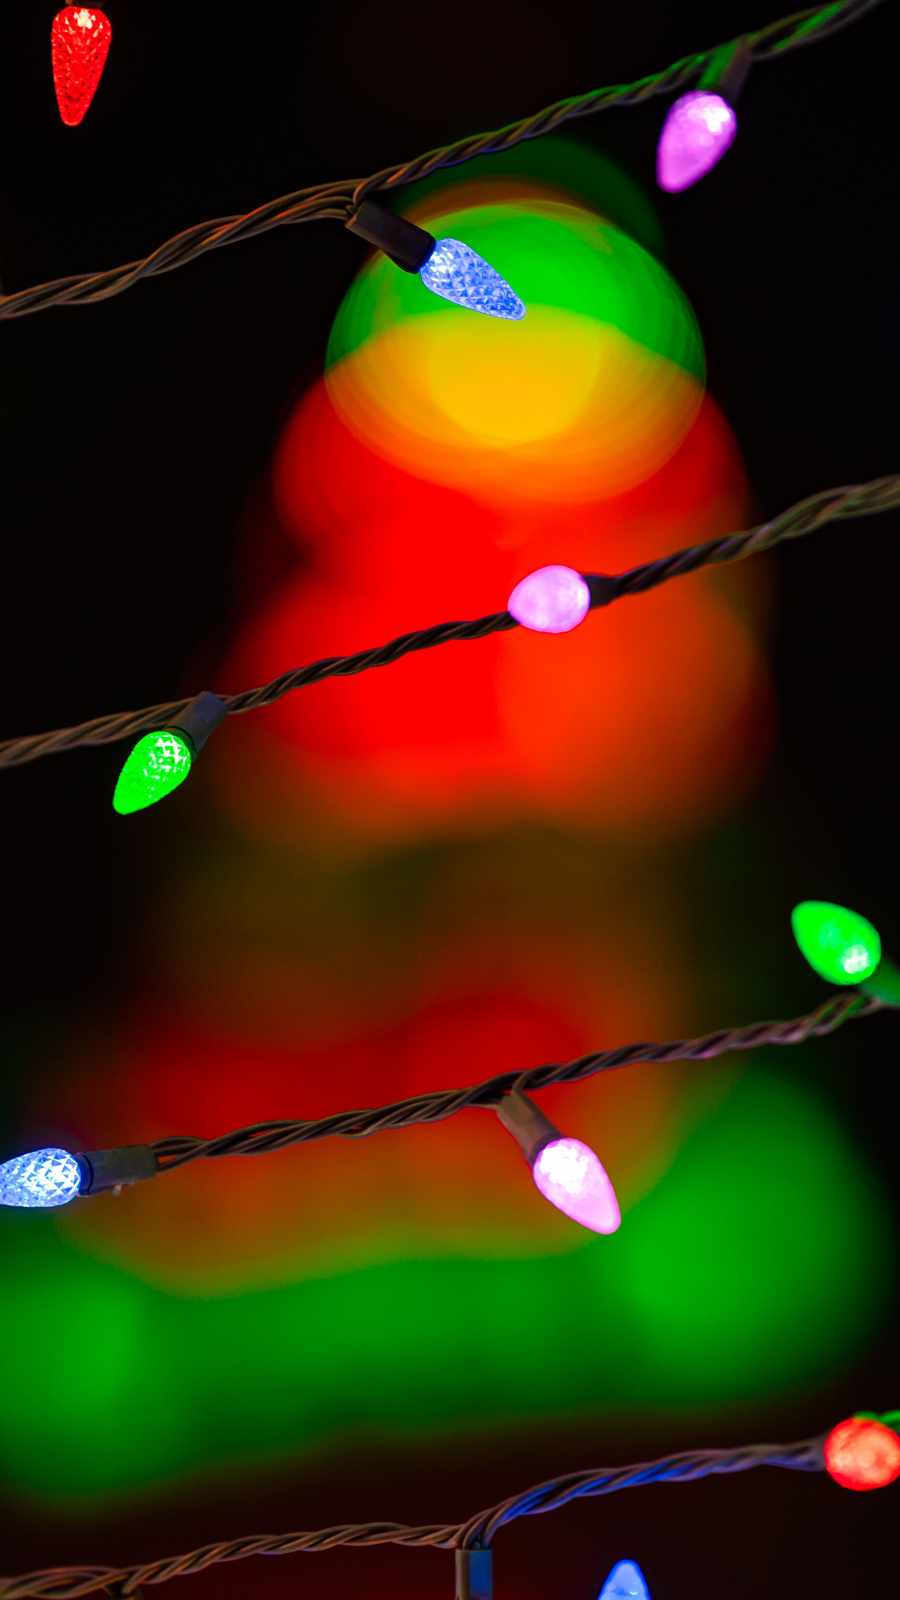 Festival Lights Christmas iPhone Wallpaper